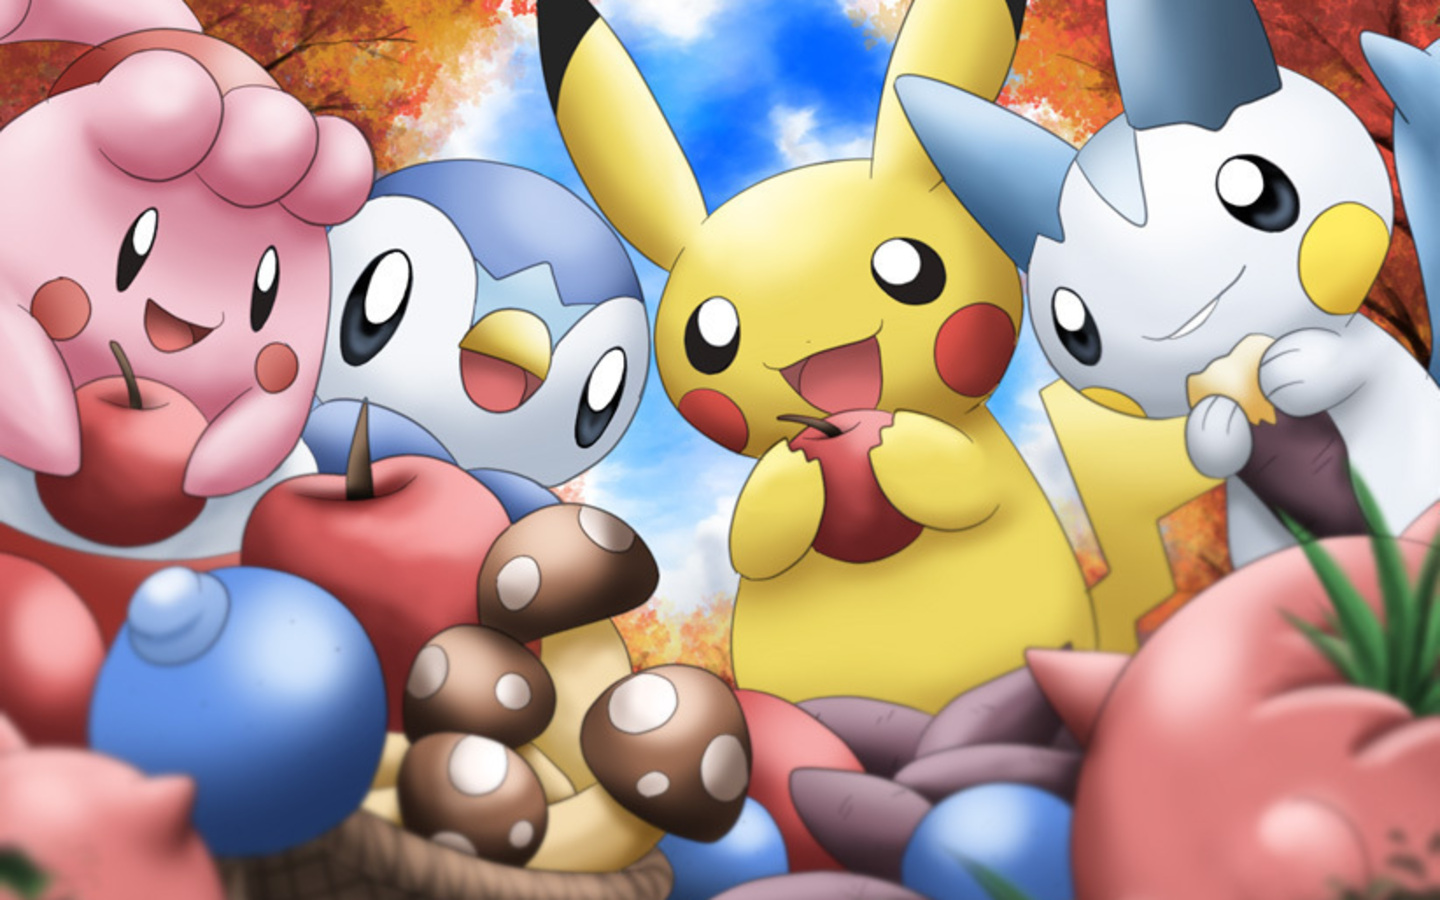 Free download Download Cute Pokemon Free Wallpaper 1440x900 Full ...